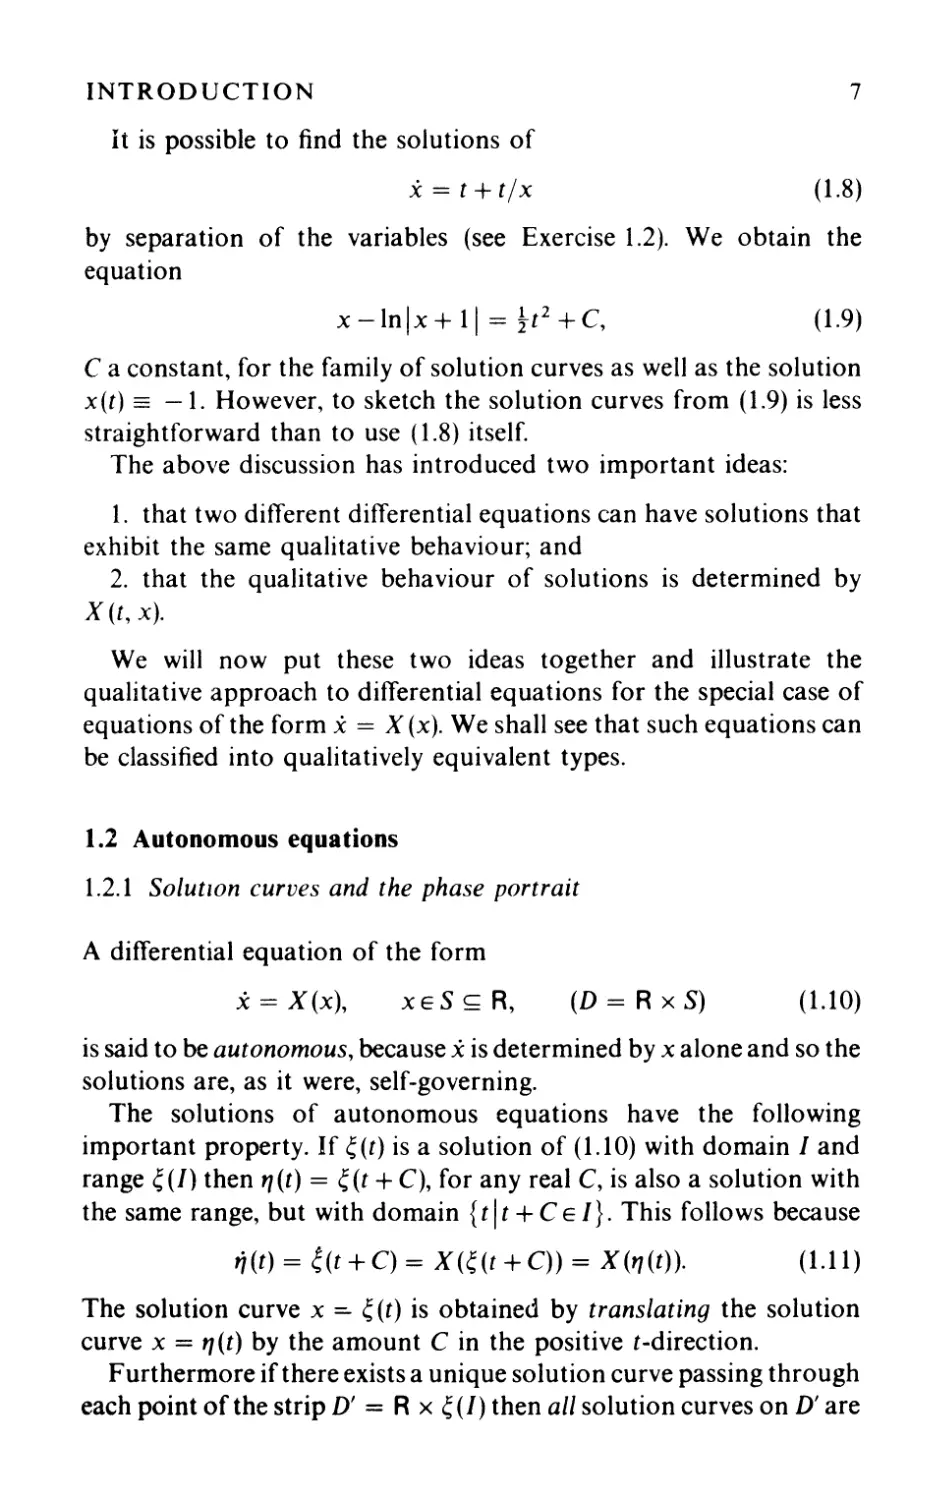 1.2 Autonomous equations